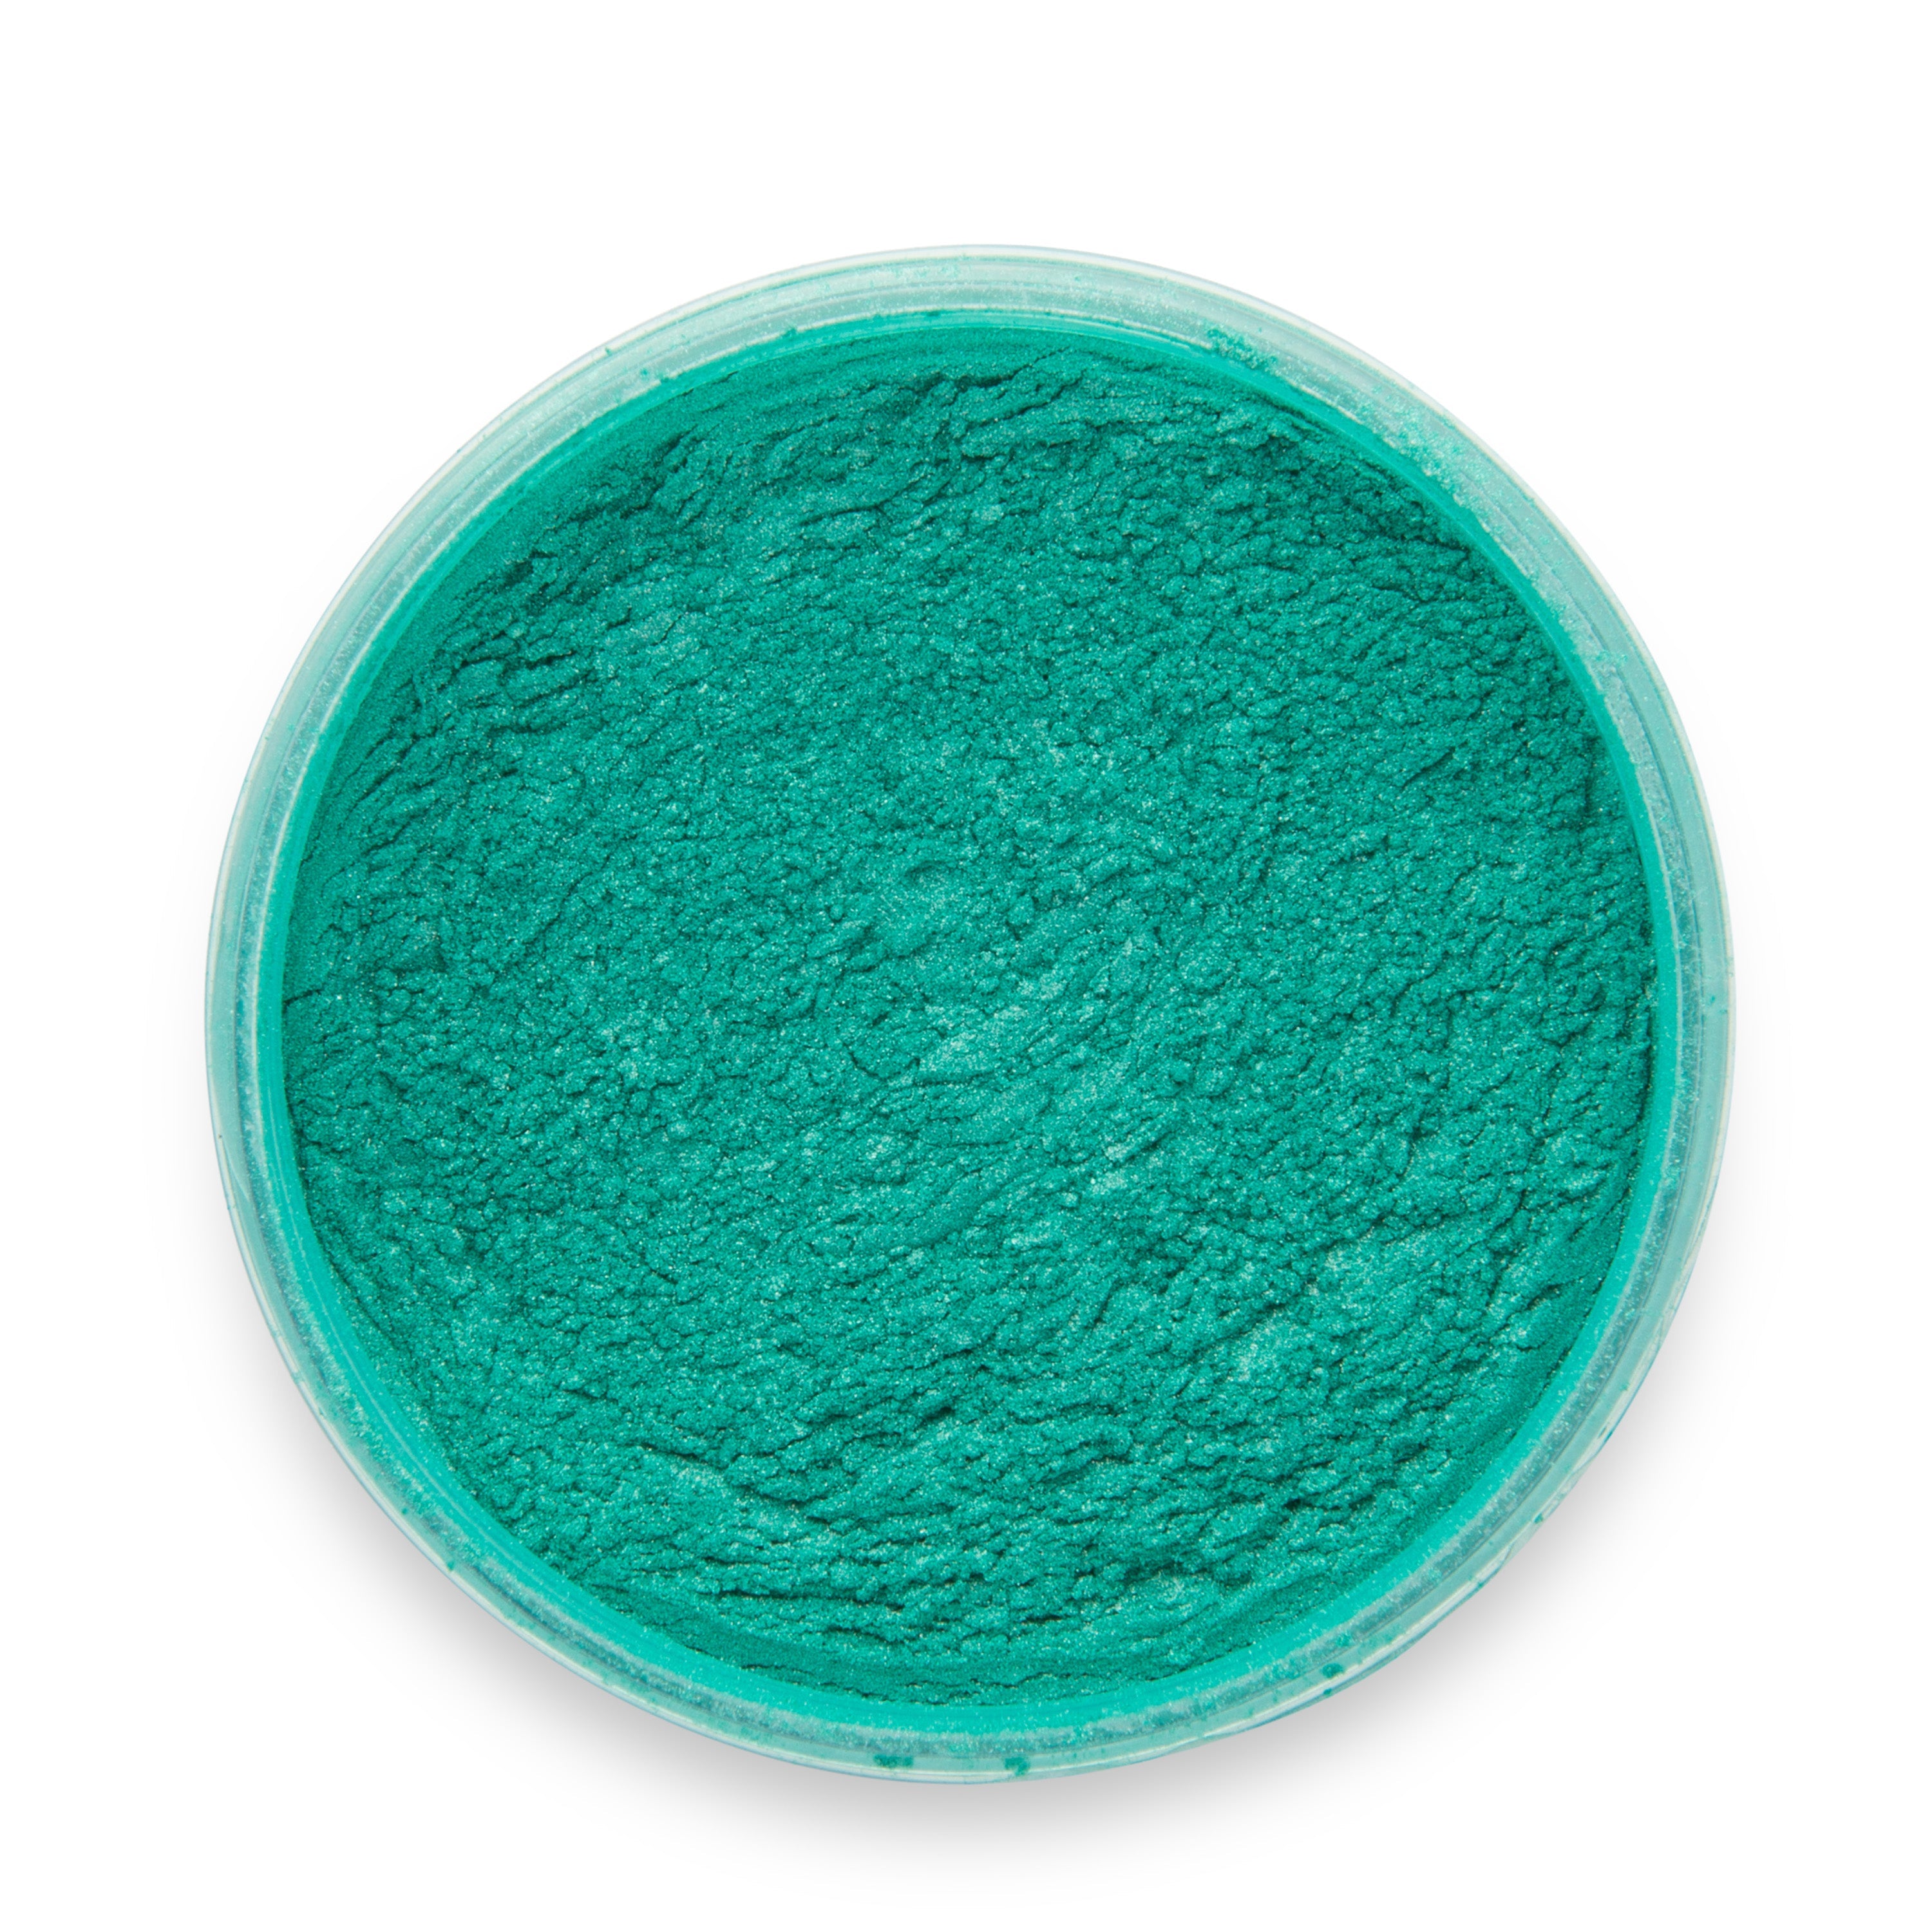 River Table Turquoise Epoxy Powder Pigment